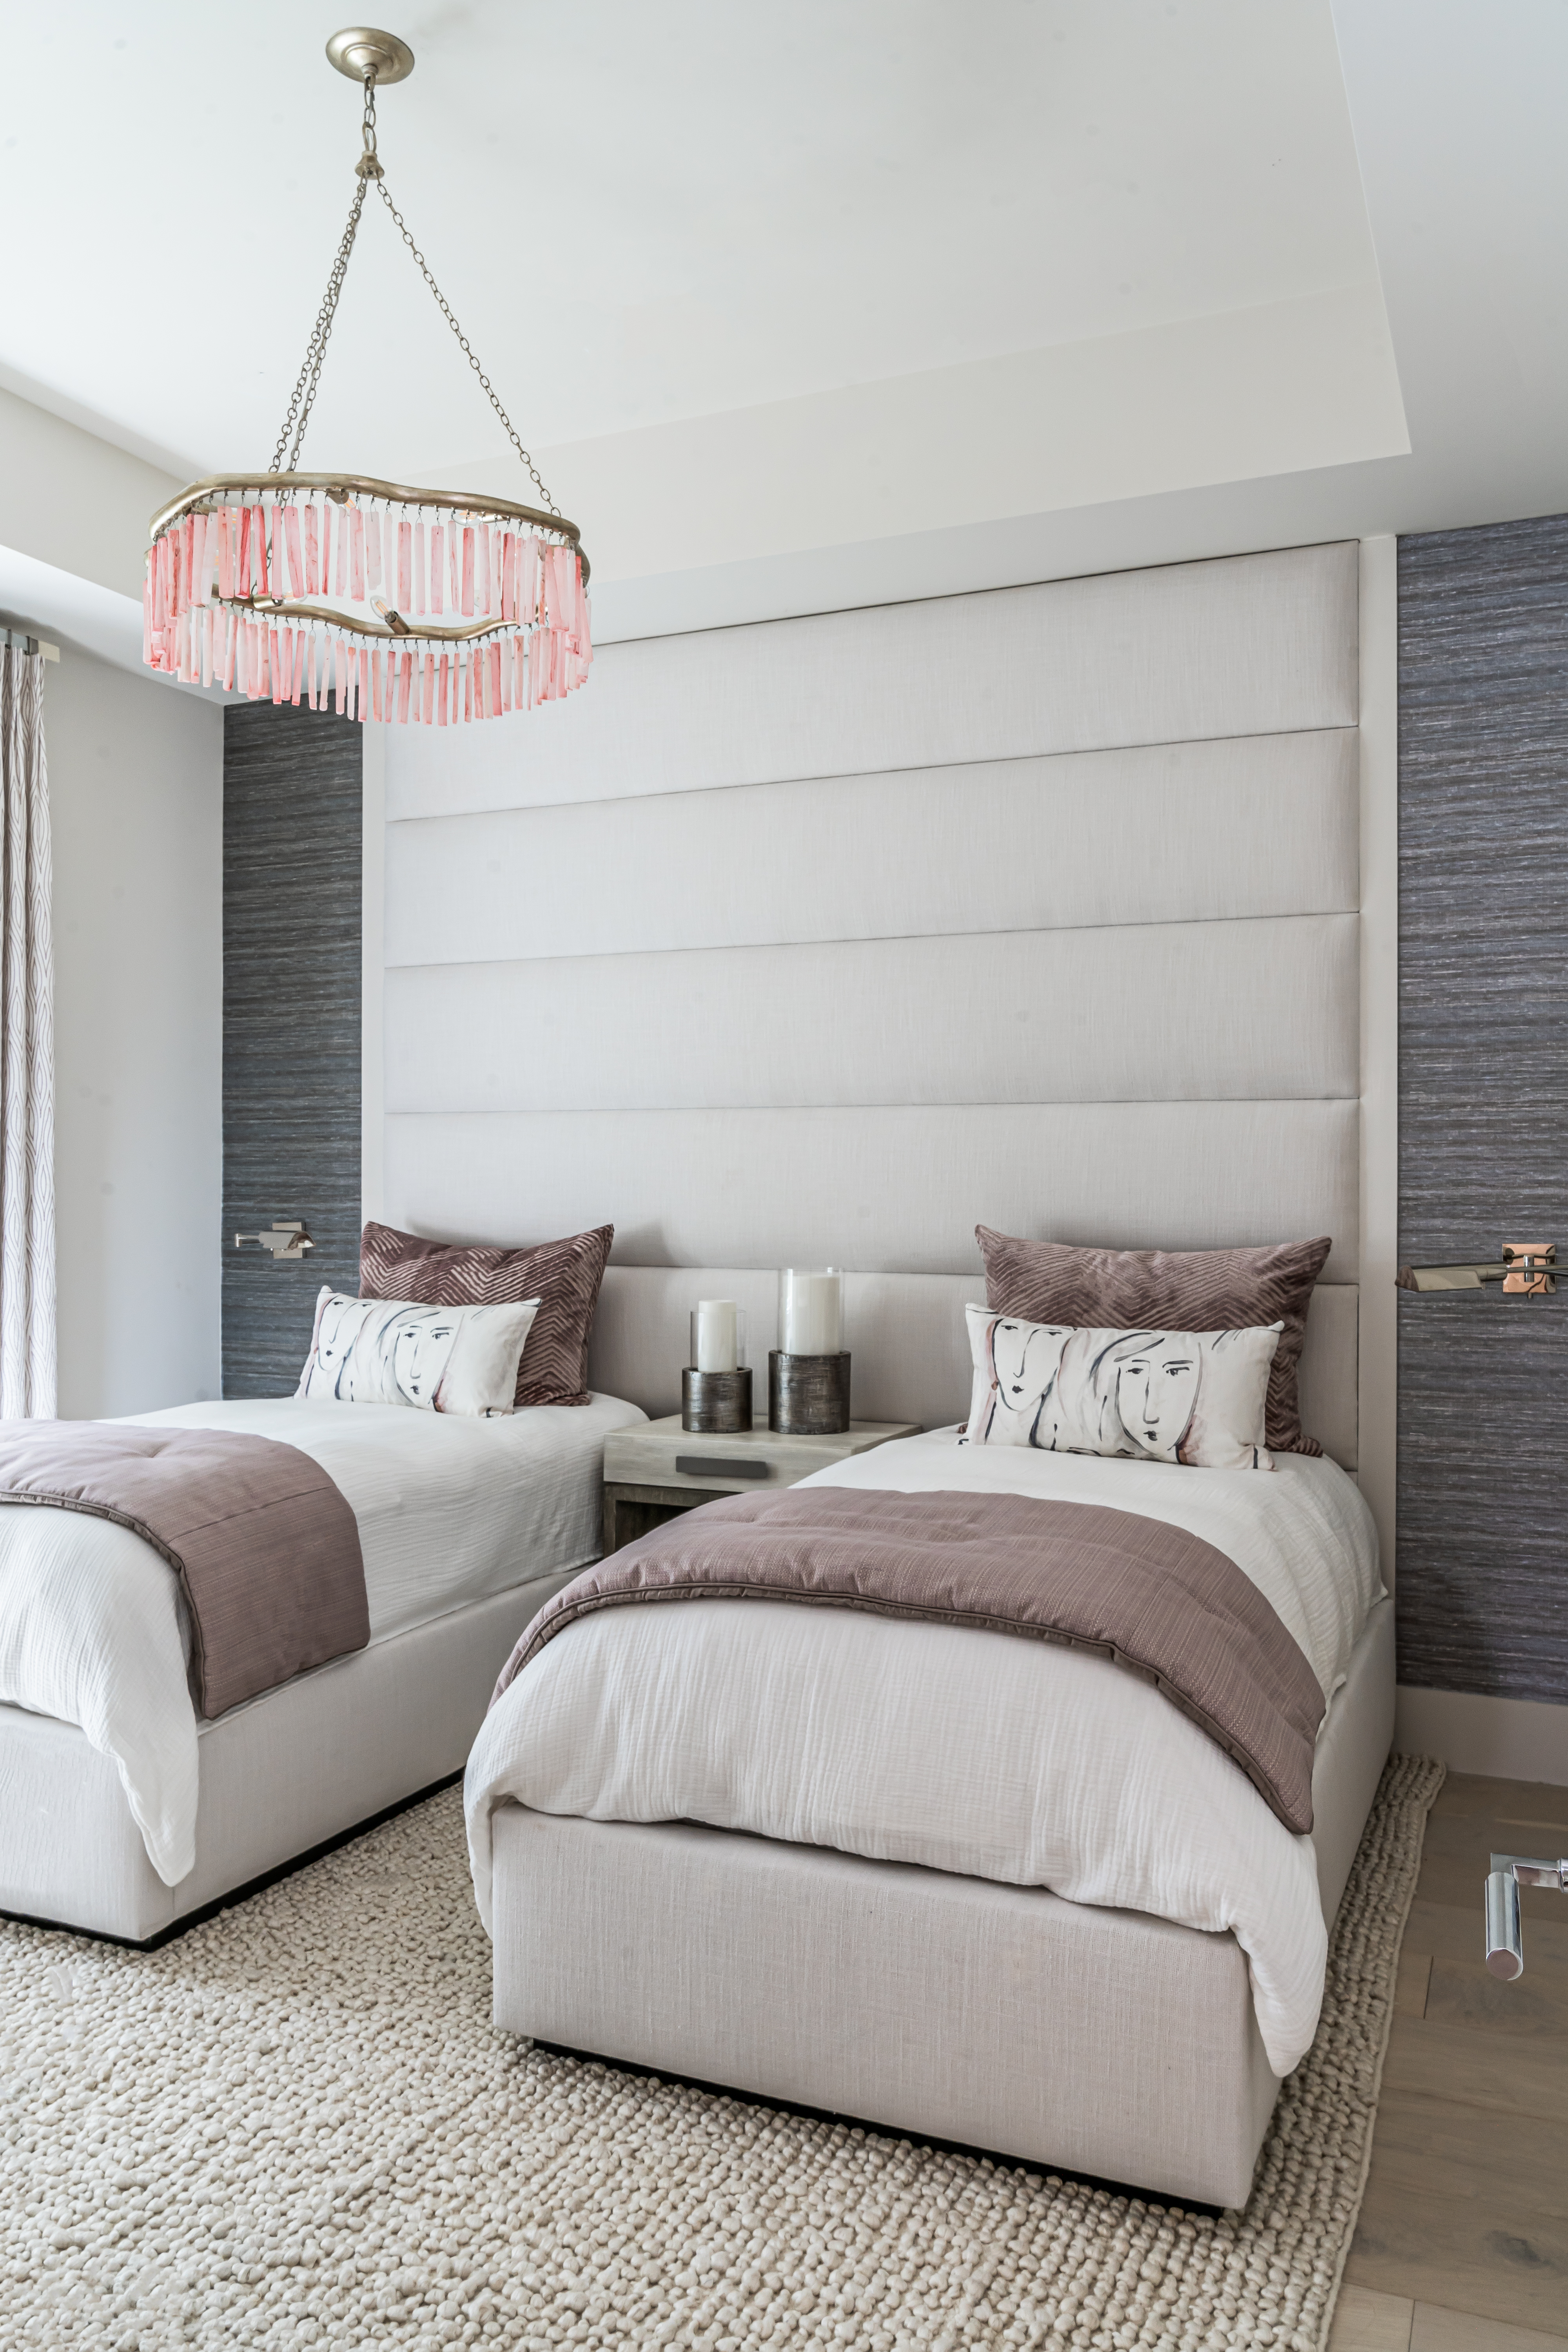 A coastal contemporary guest bedroom design with a blush palette, designed by Florida interior designer Brooke Meyer of Gulfshore Interior Design